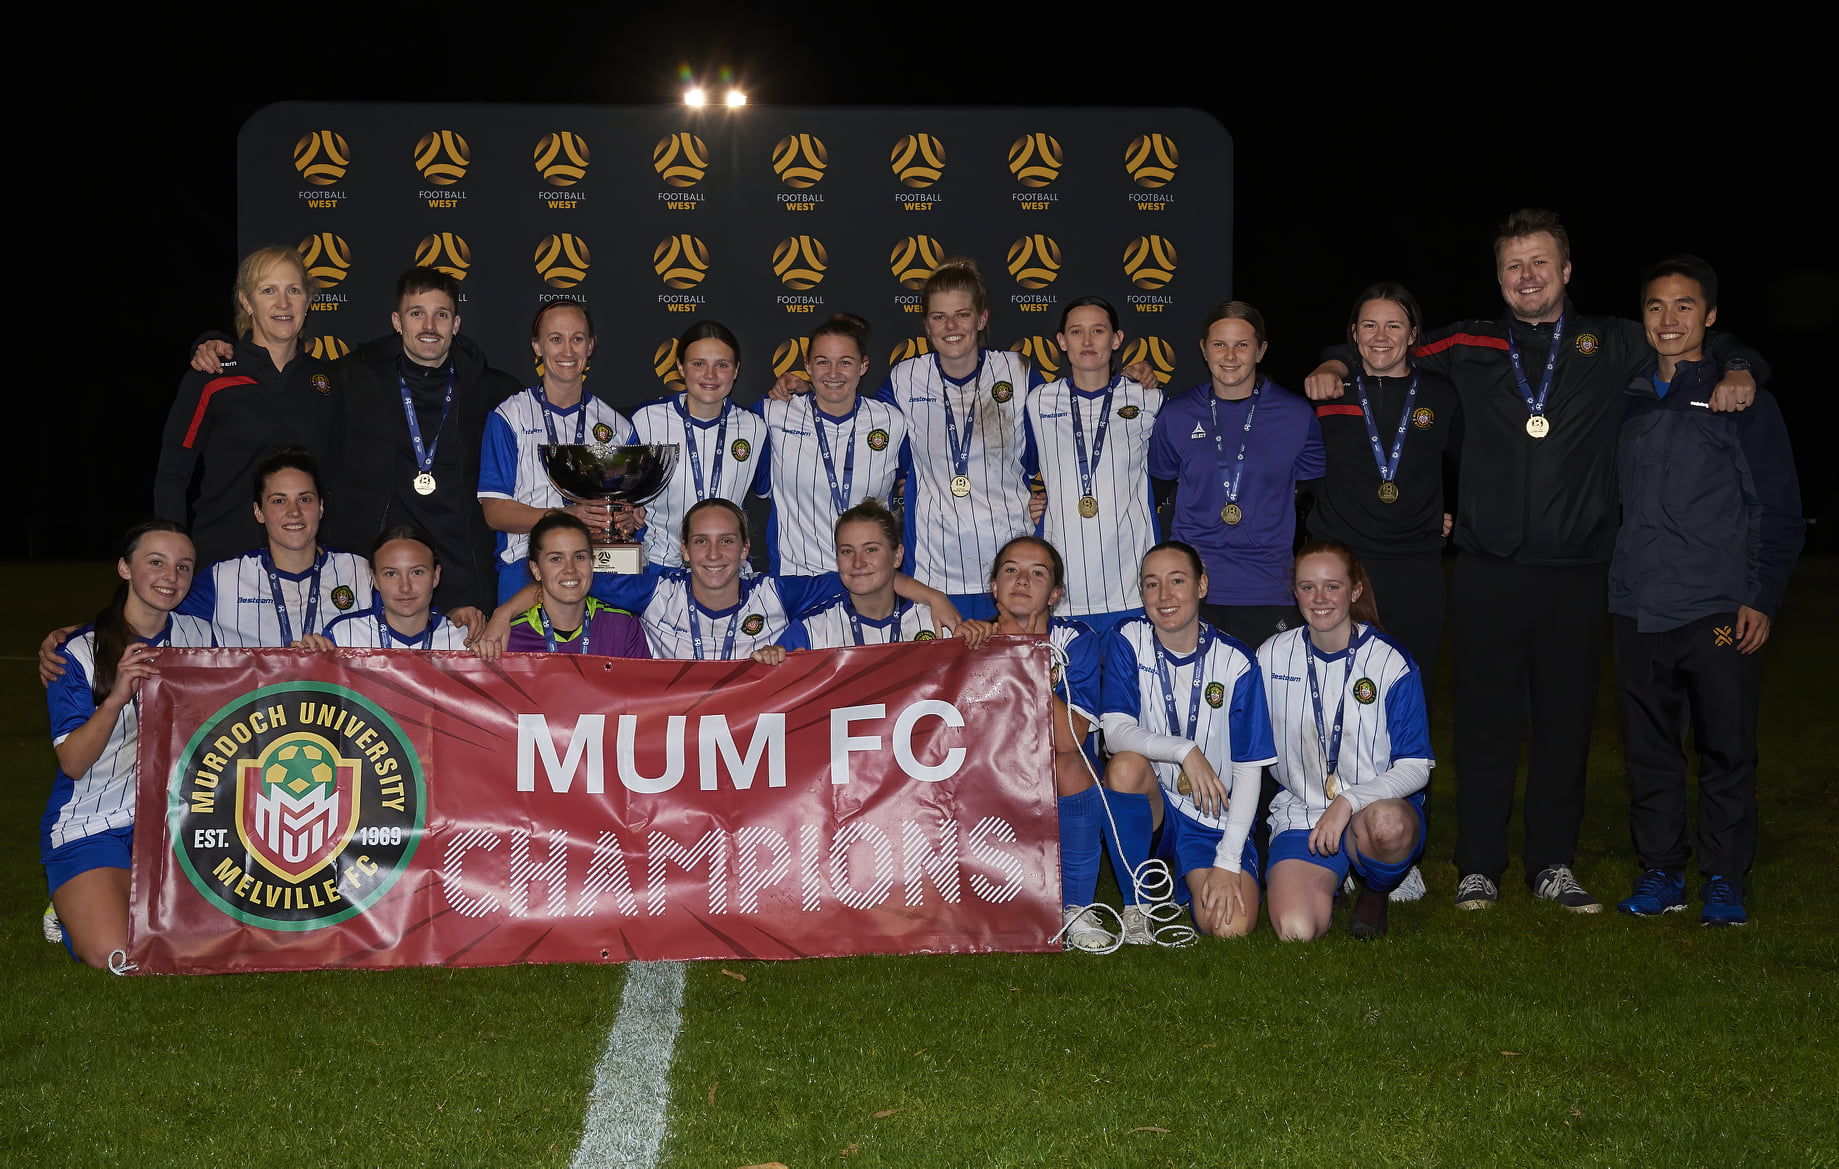 MUMFC League Winners